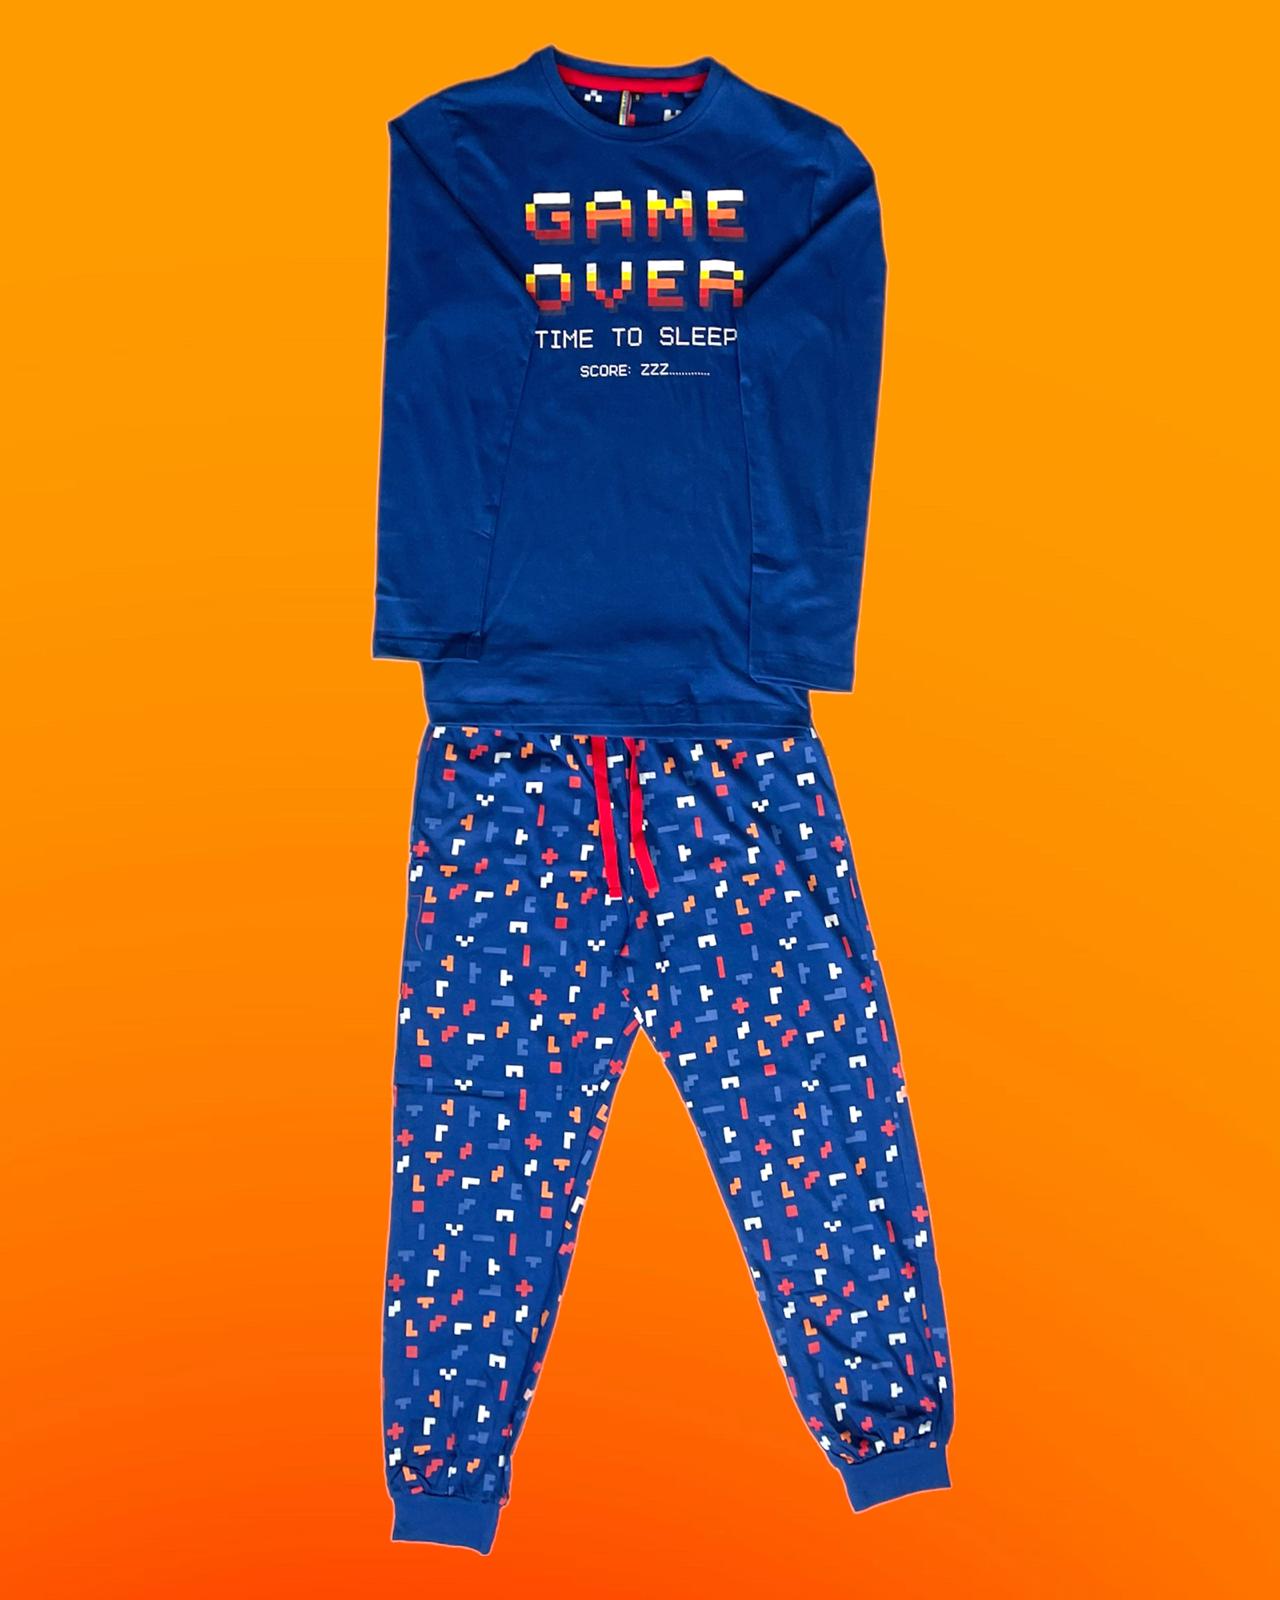 Diver x Admas | Pijama gamer hombre azul Game Over time to go to Sleep